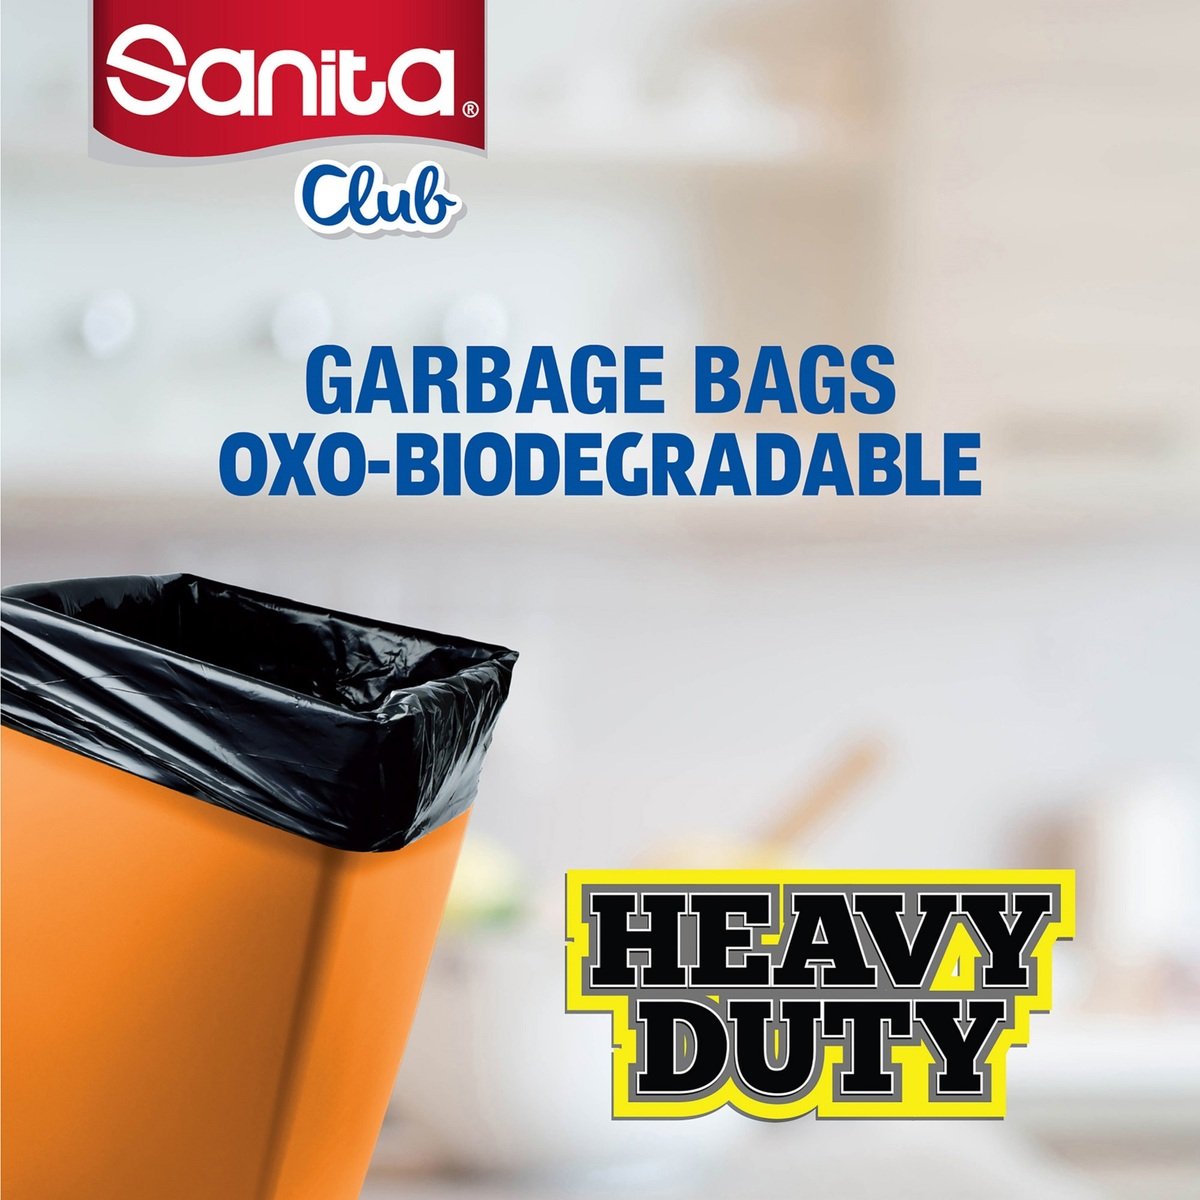 Sanita Club Garbage Bags Heavy Duty Medium 30 Gallons Size 72 x 85cm 45pcs